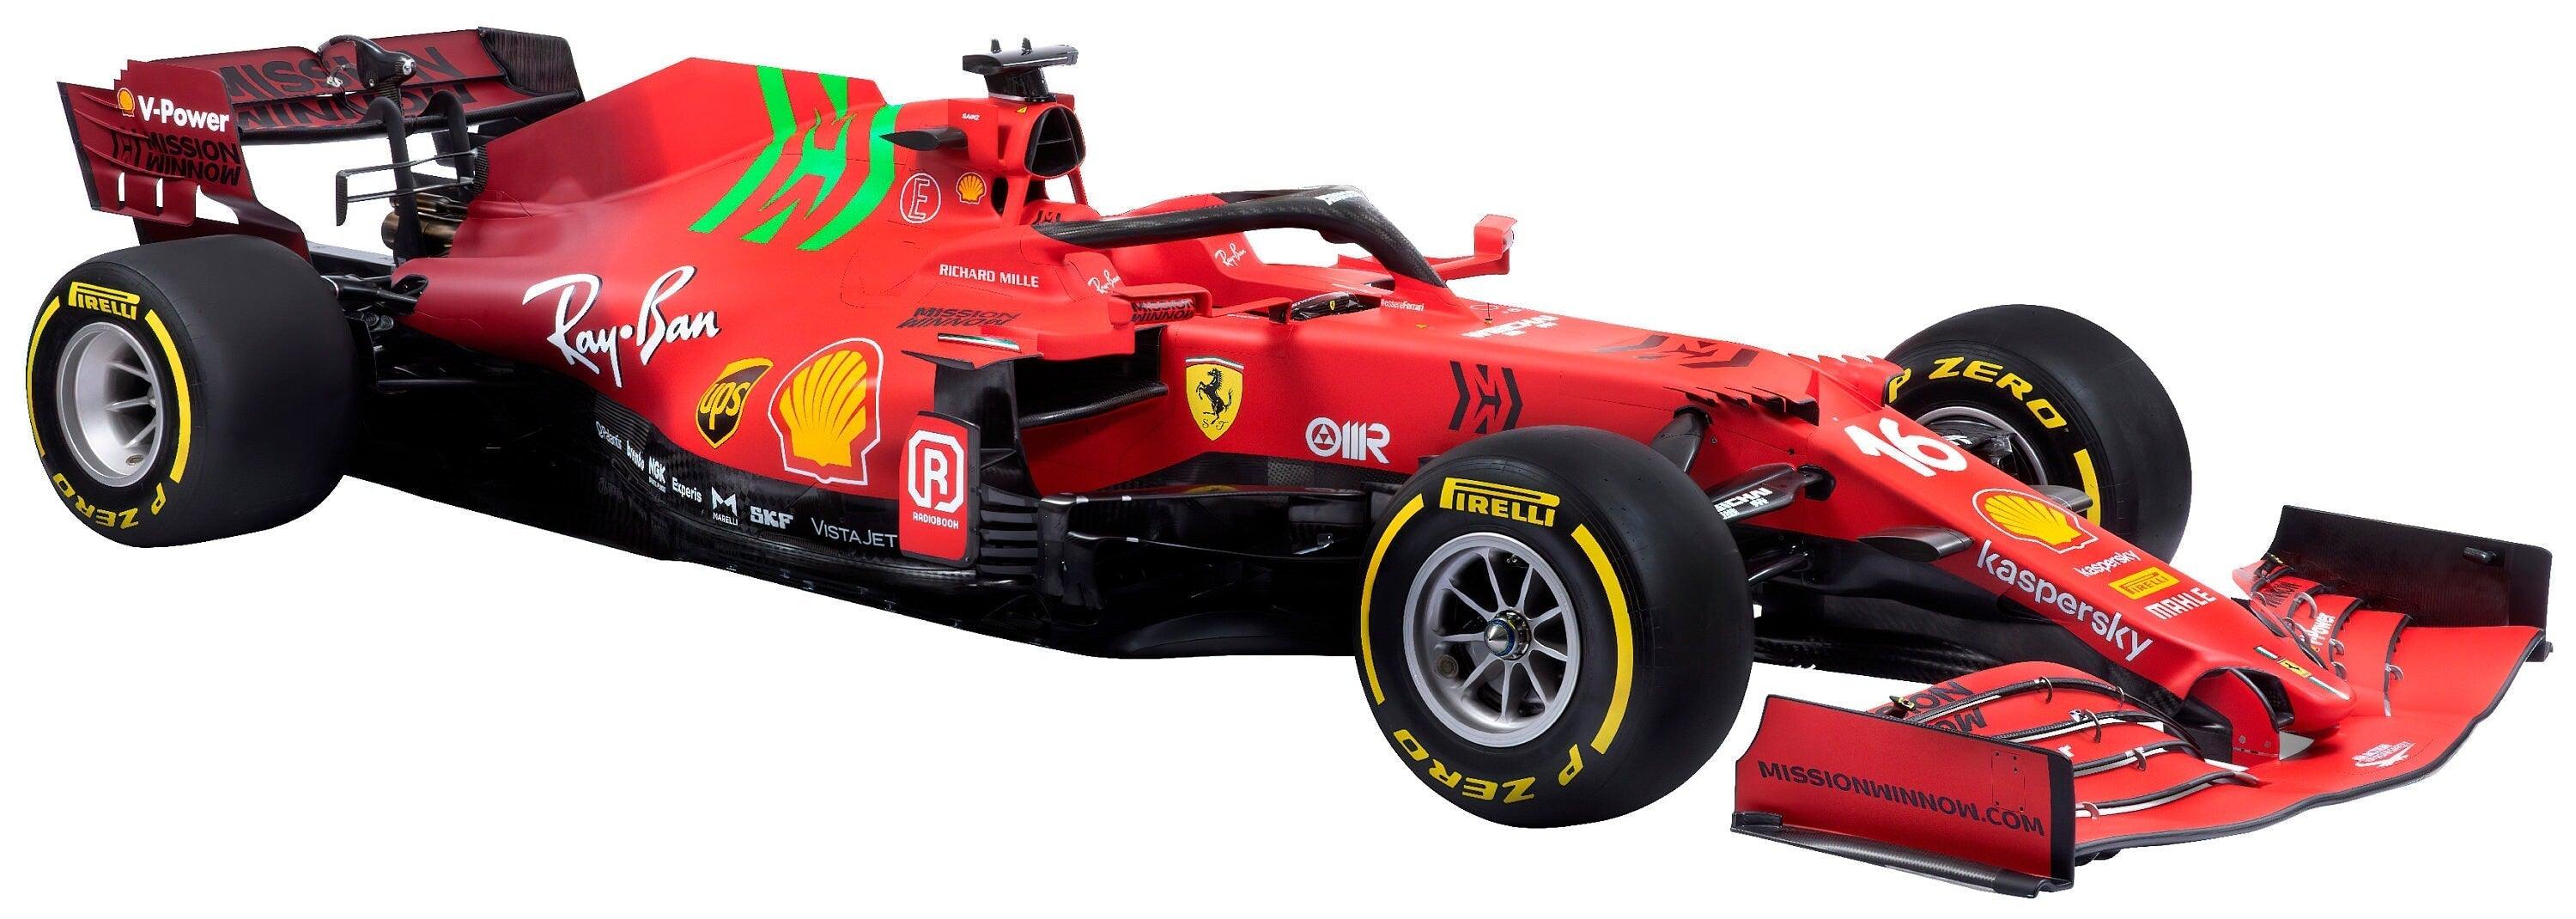 Ferrari #16 Wall Decal Sticker, Charles Leclerc Formula 1, F1